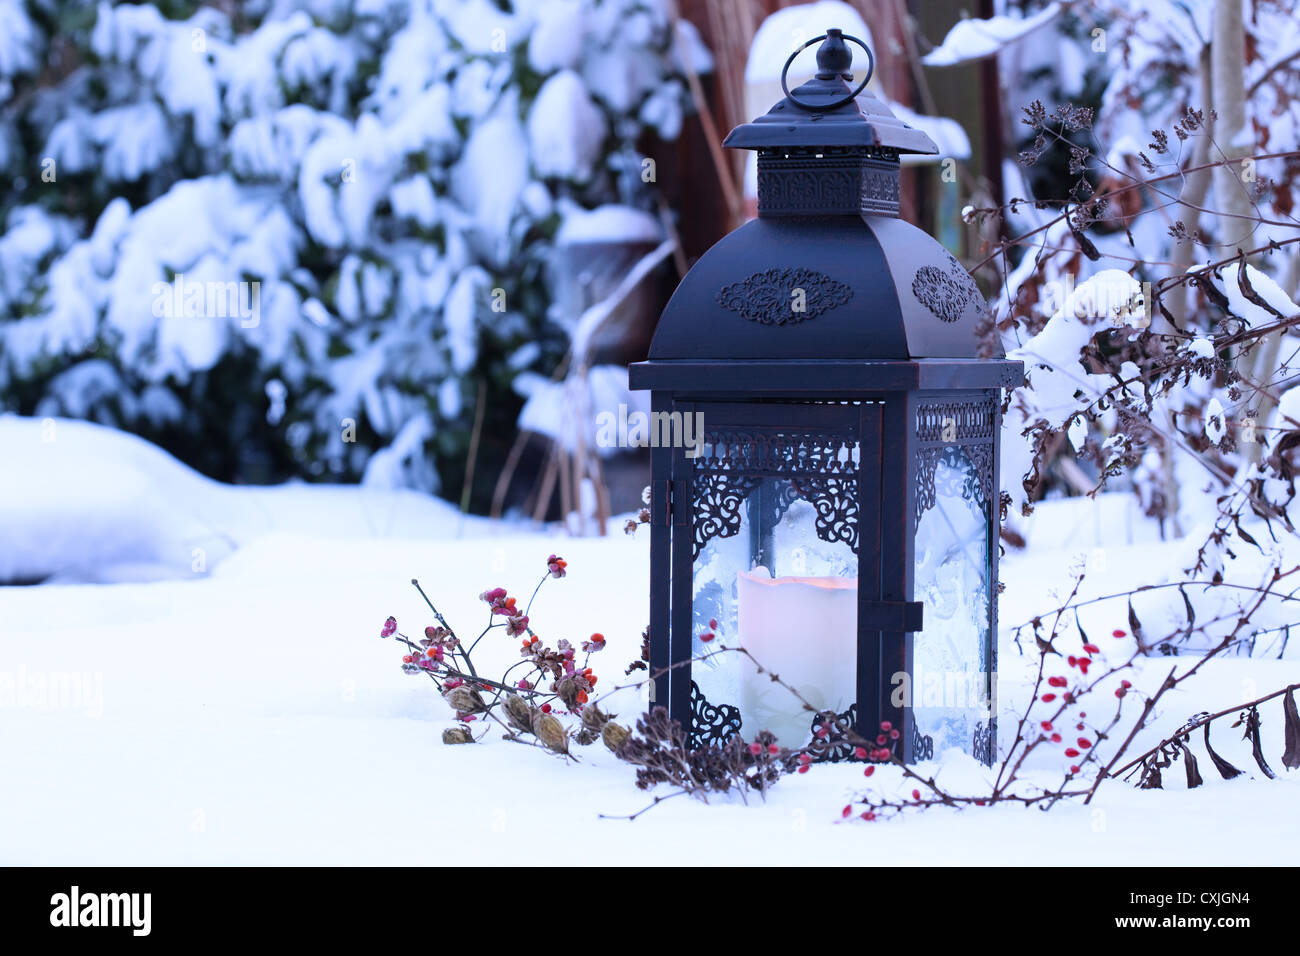 Lantern in the snow.  Laterne im Schnee. Stock Photo